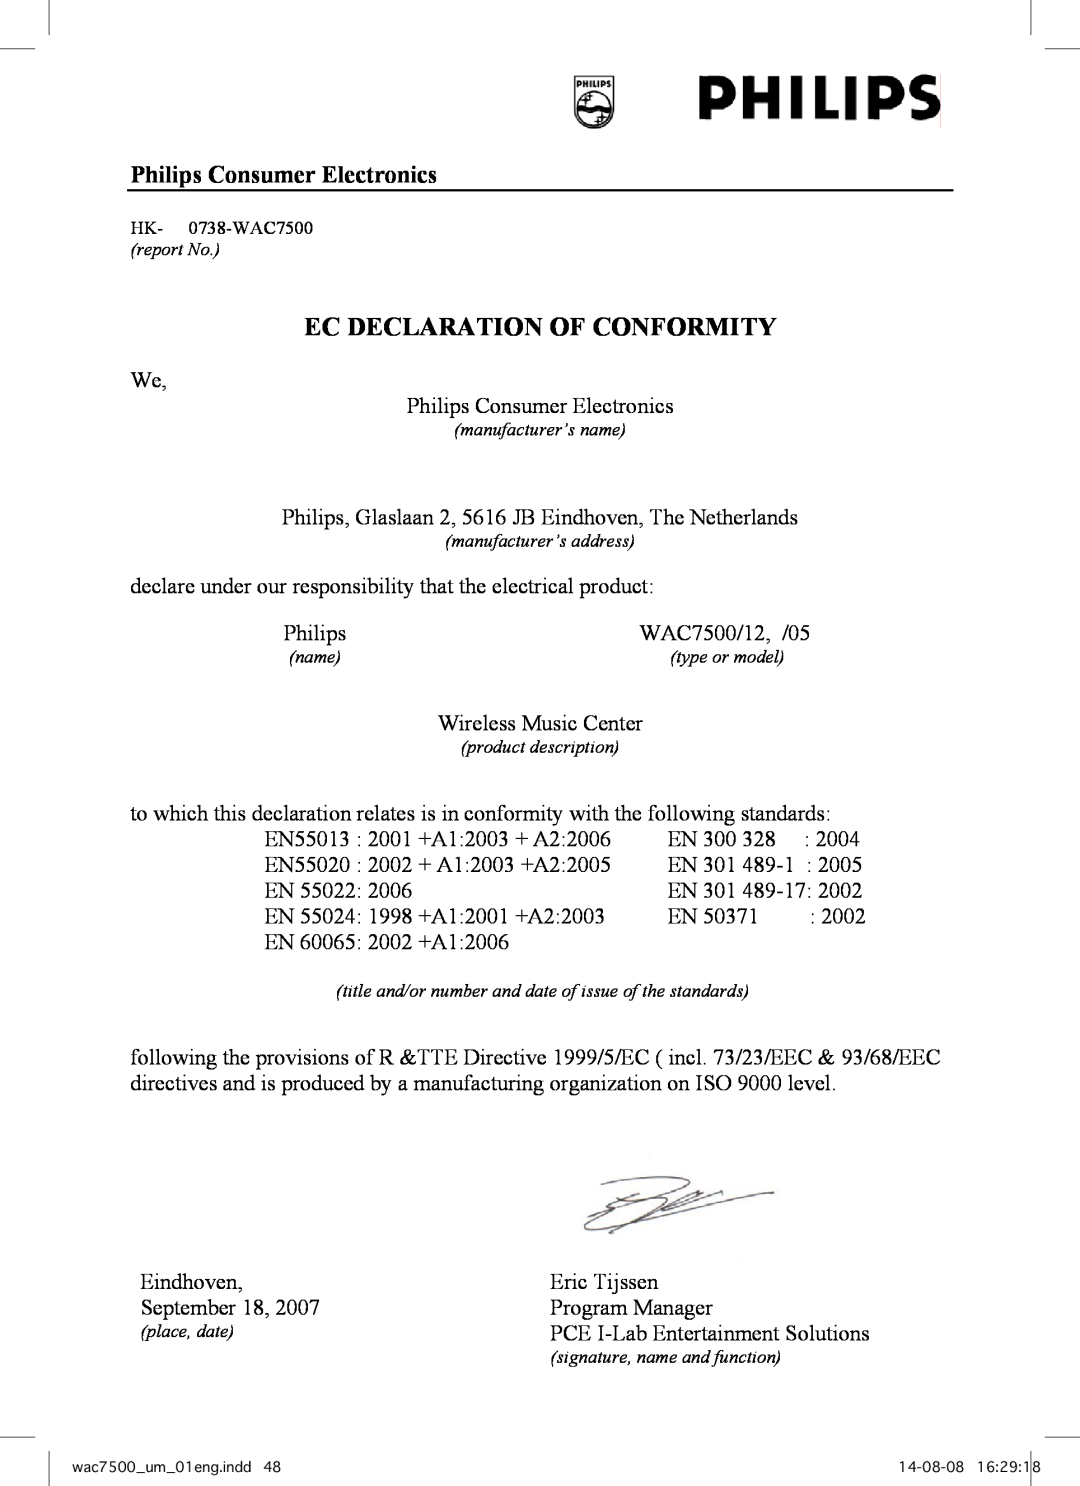 Philips user manual Ec Declaration Of Conformity, Philips Consumer Electronics, WAC7500/12, /05 